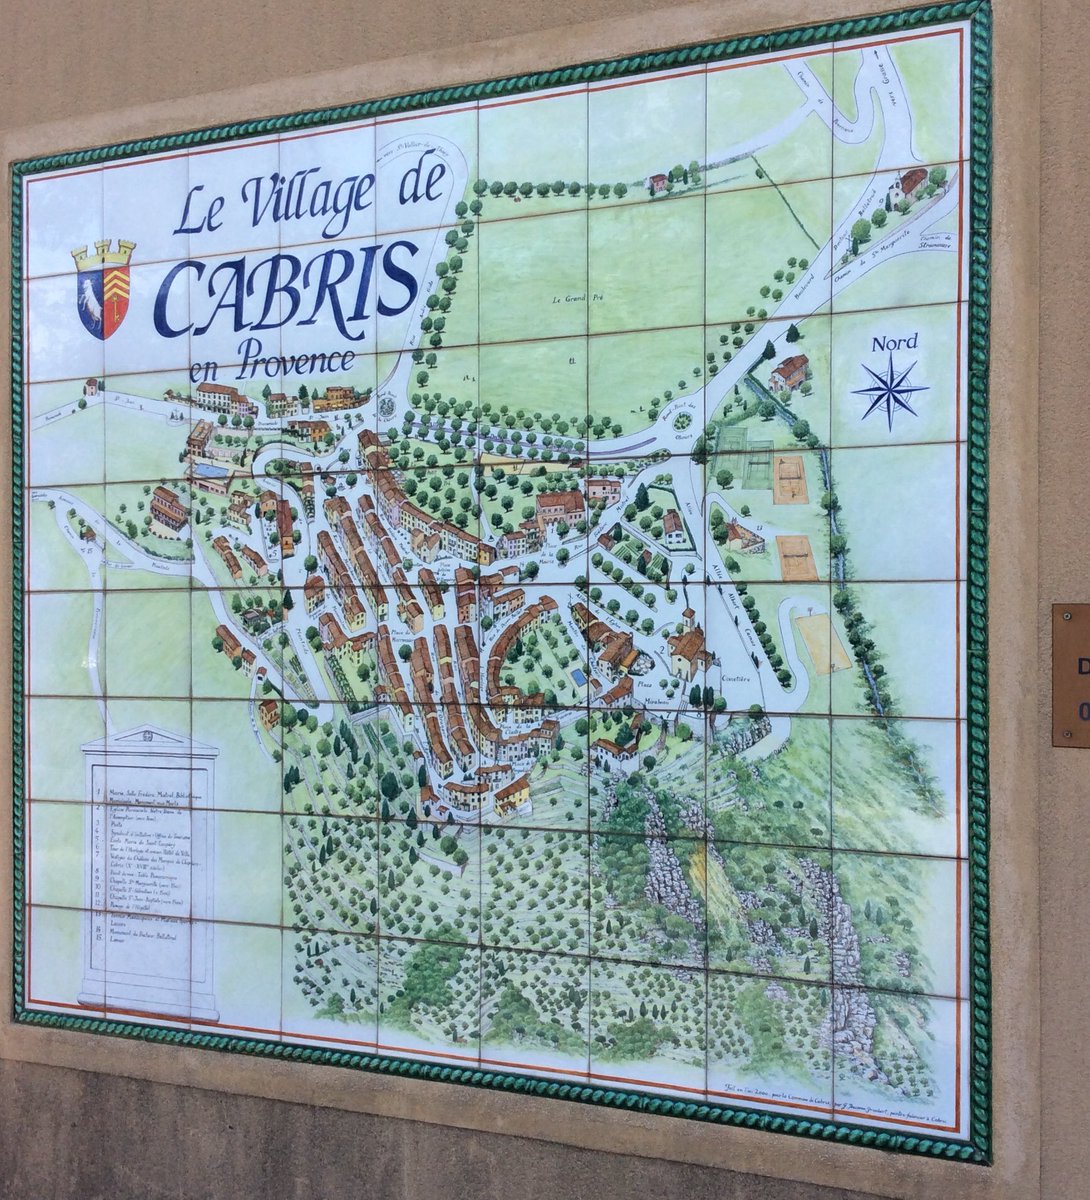 Always V. Welcome 🤗 @ Le Village de Cabris en Provence ! 🚙 #Cabris #Provence #AlpesMaritimes #Grasse